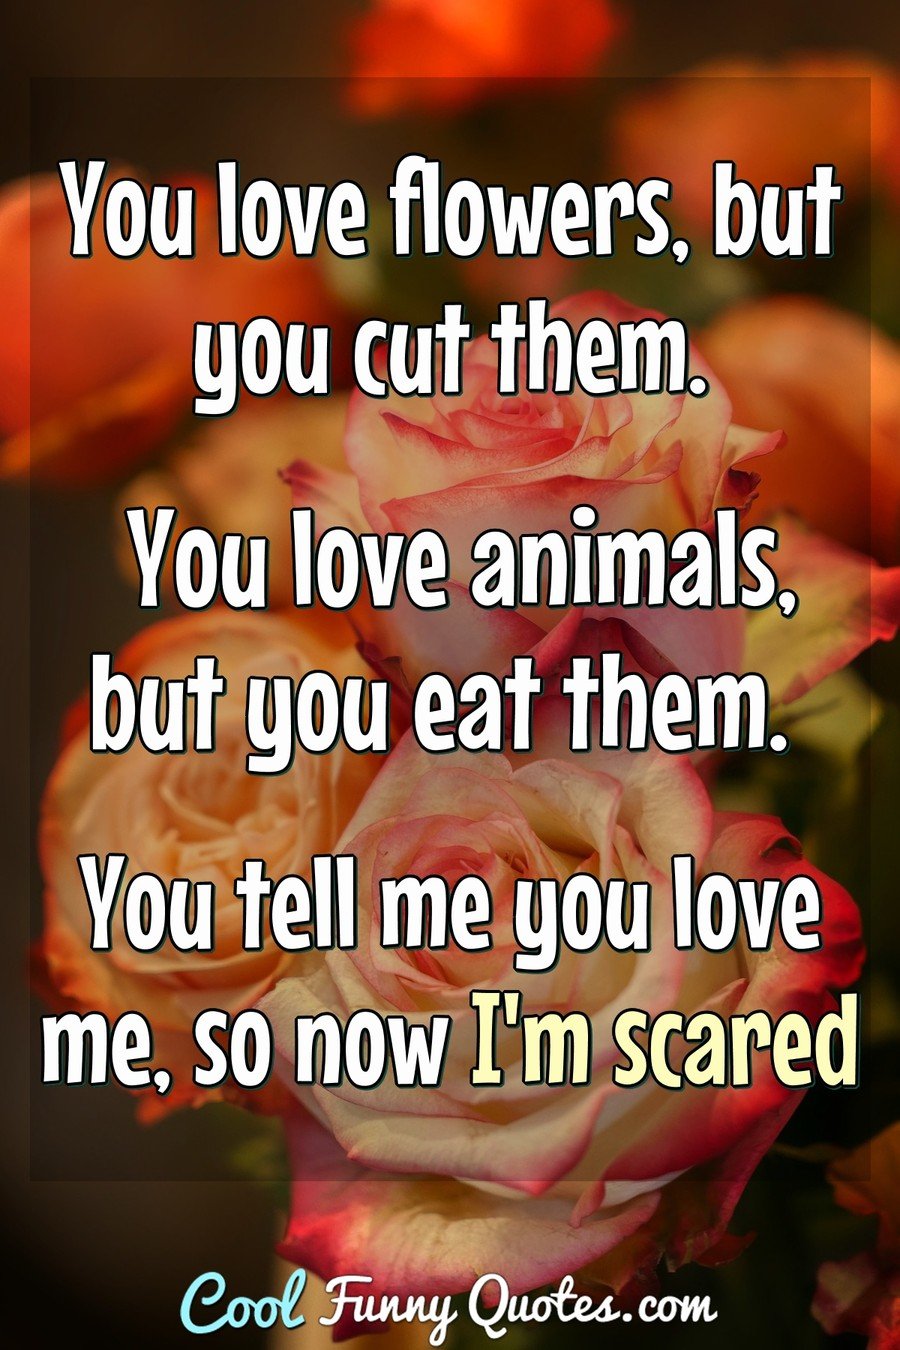 im scared quotes love